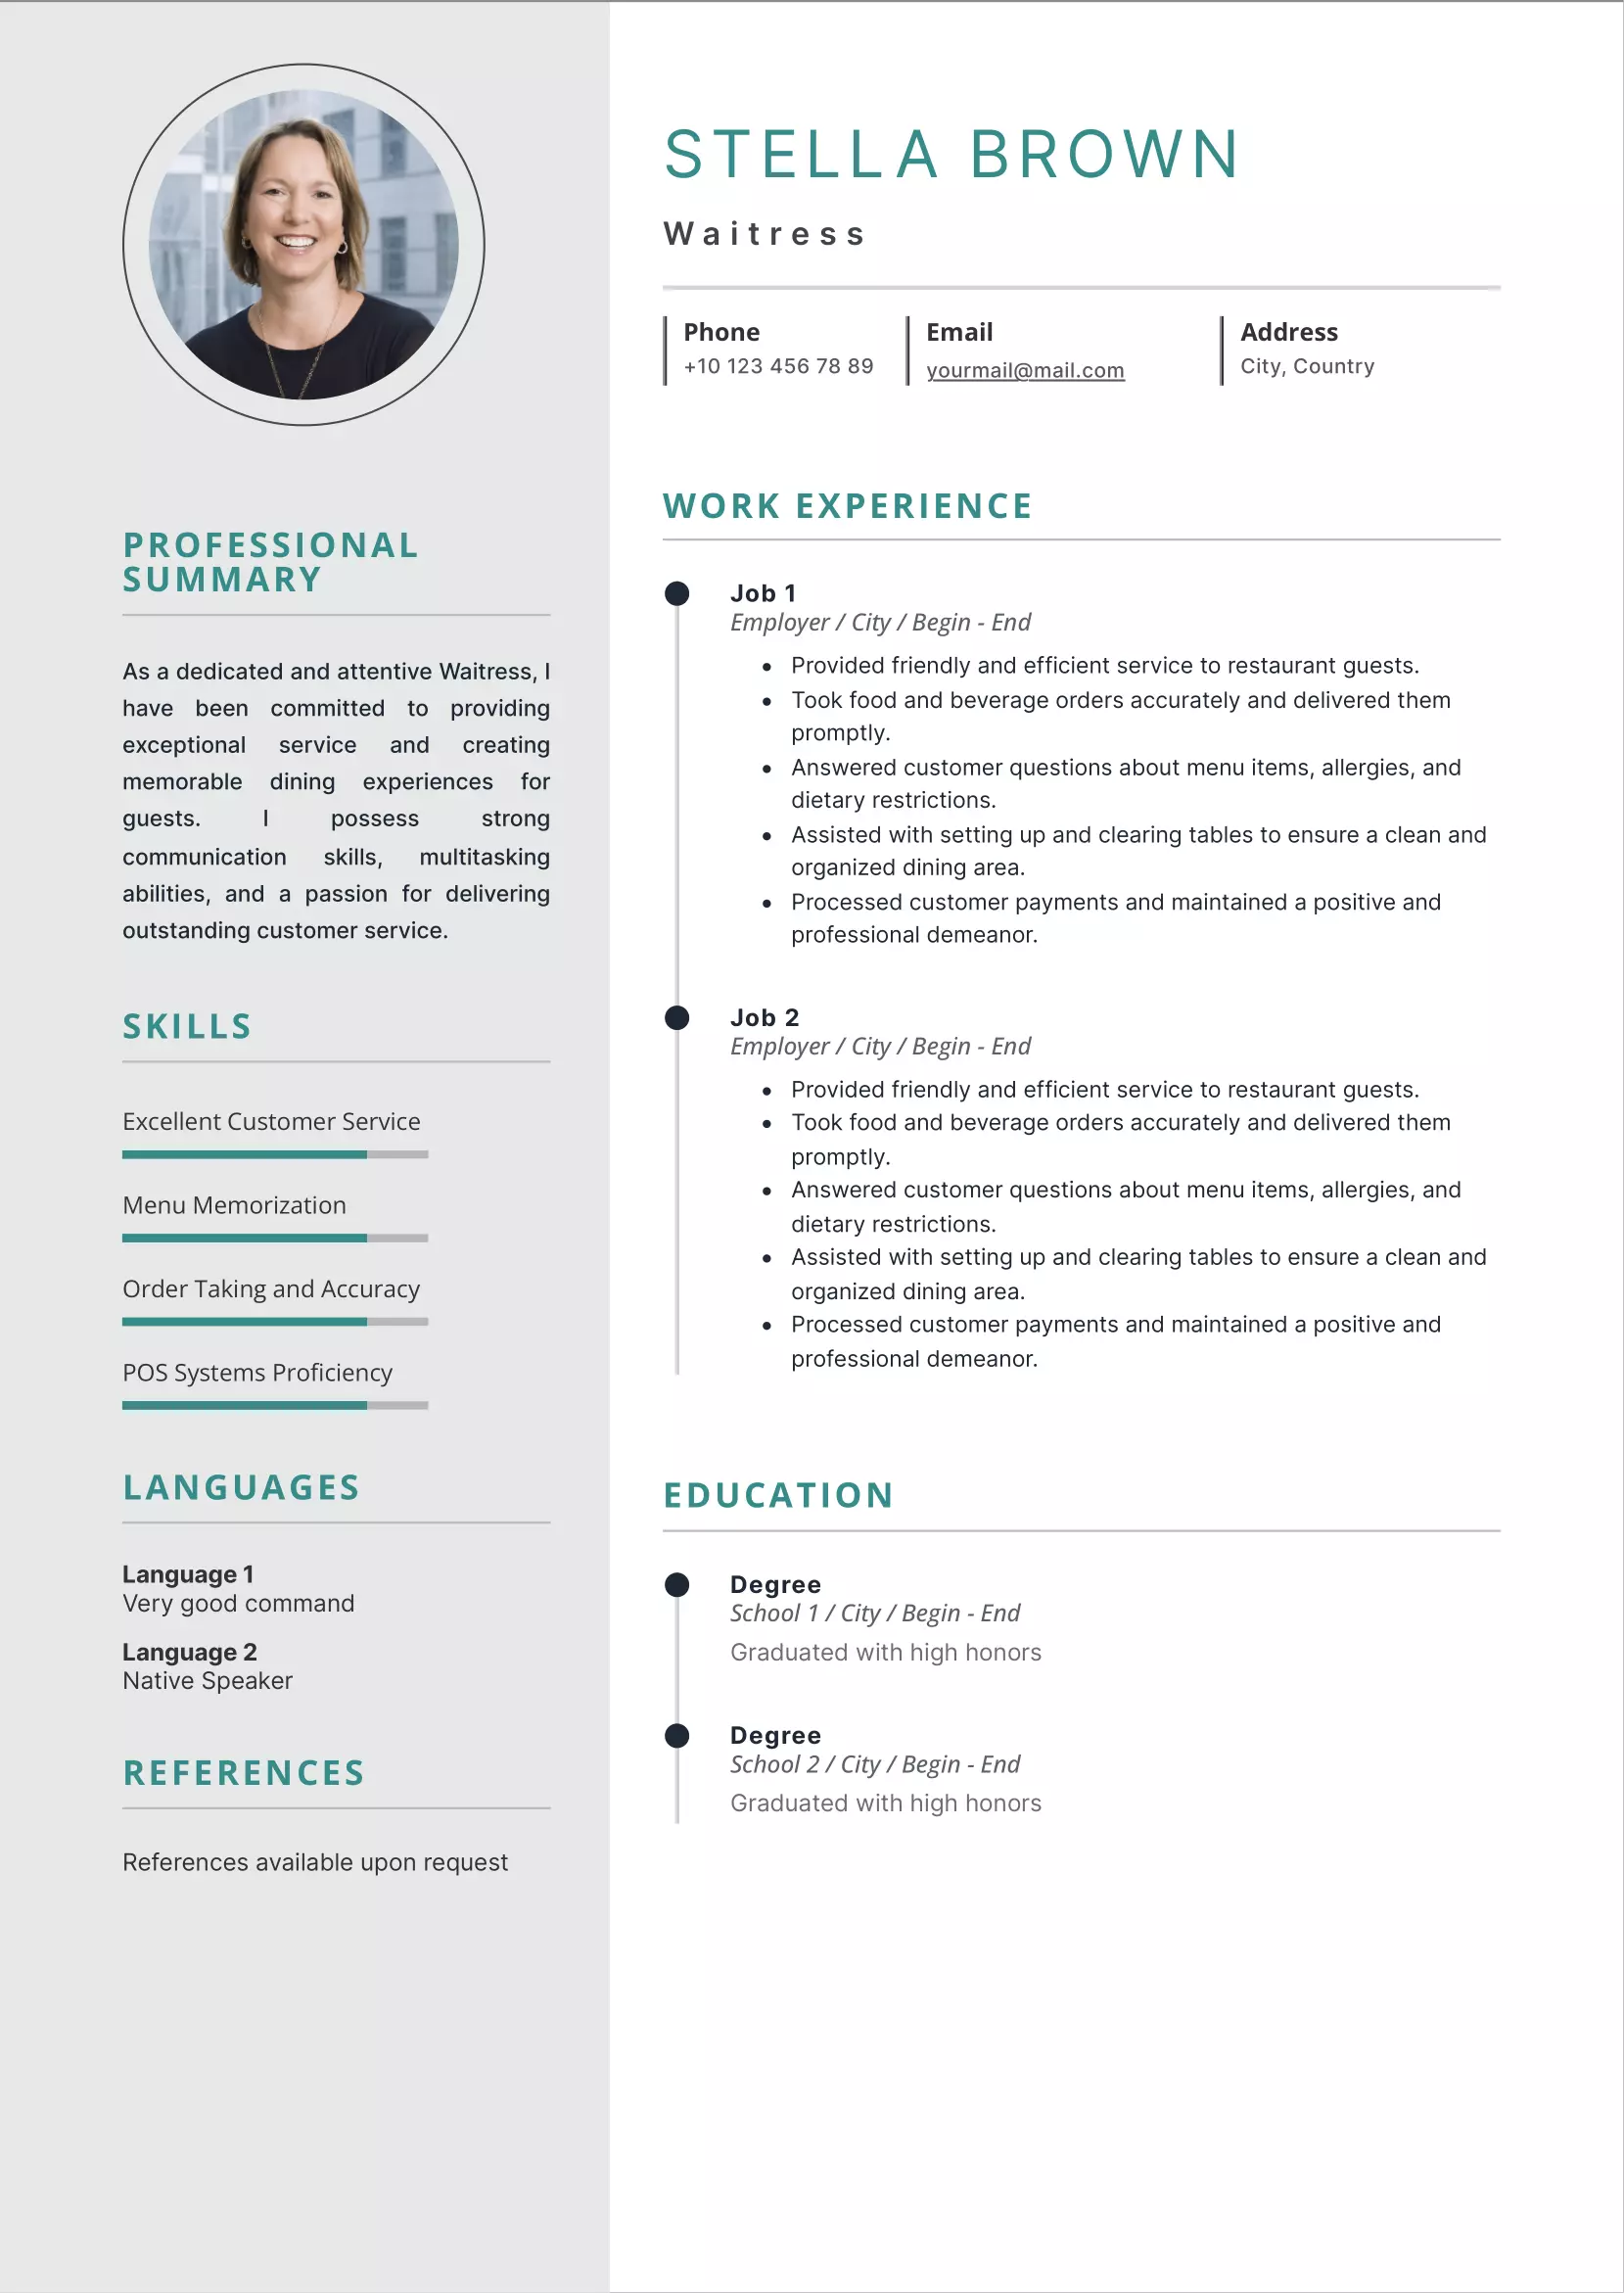 Waitress resume CV